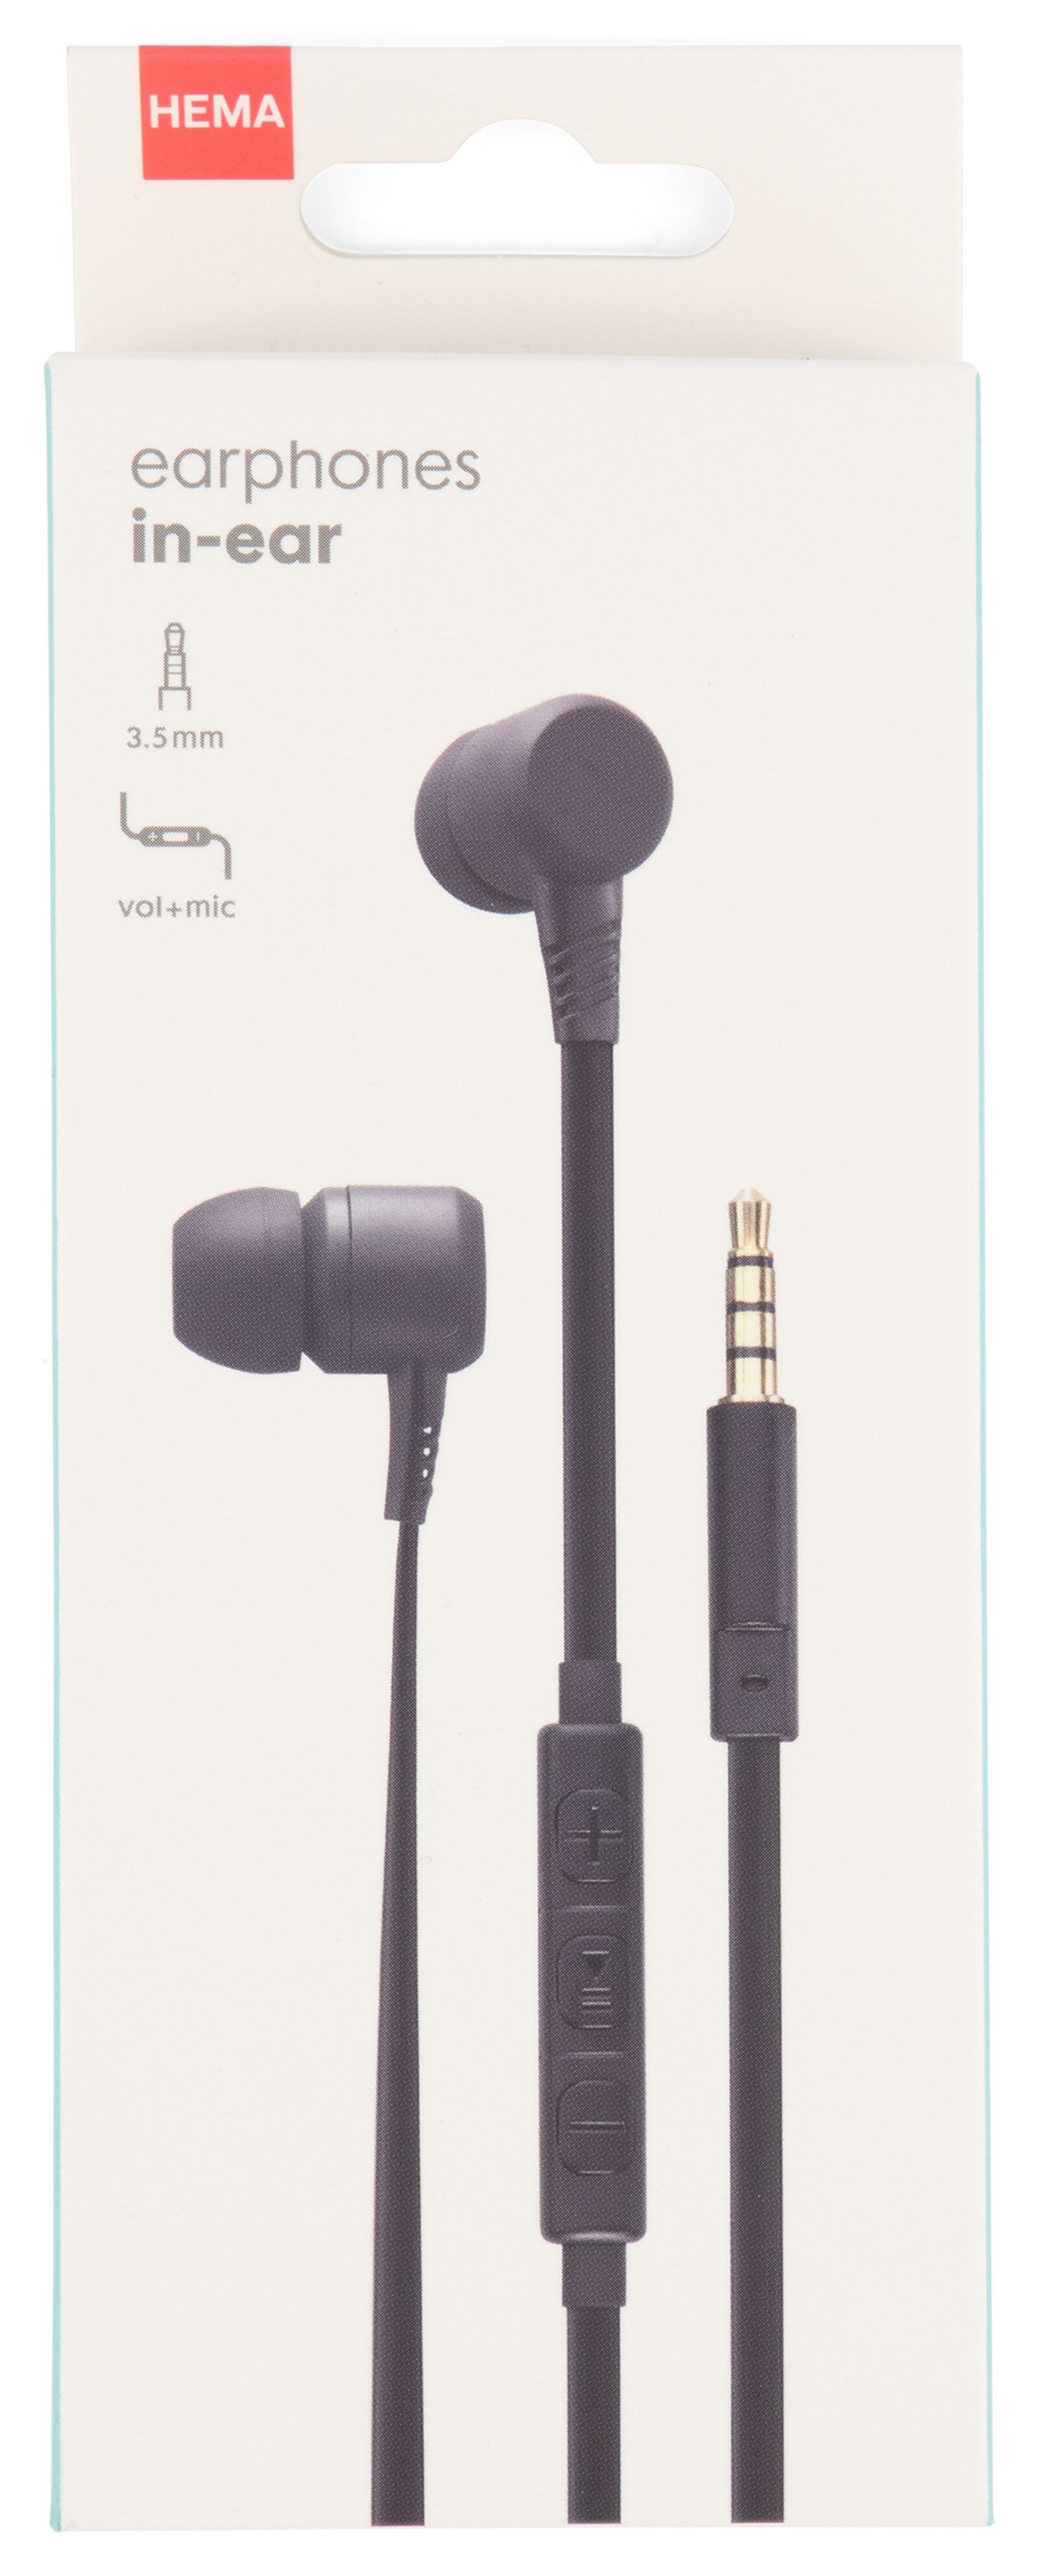 oortelefoon in-ear met microfoon- en volumeregeling - HEMA